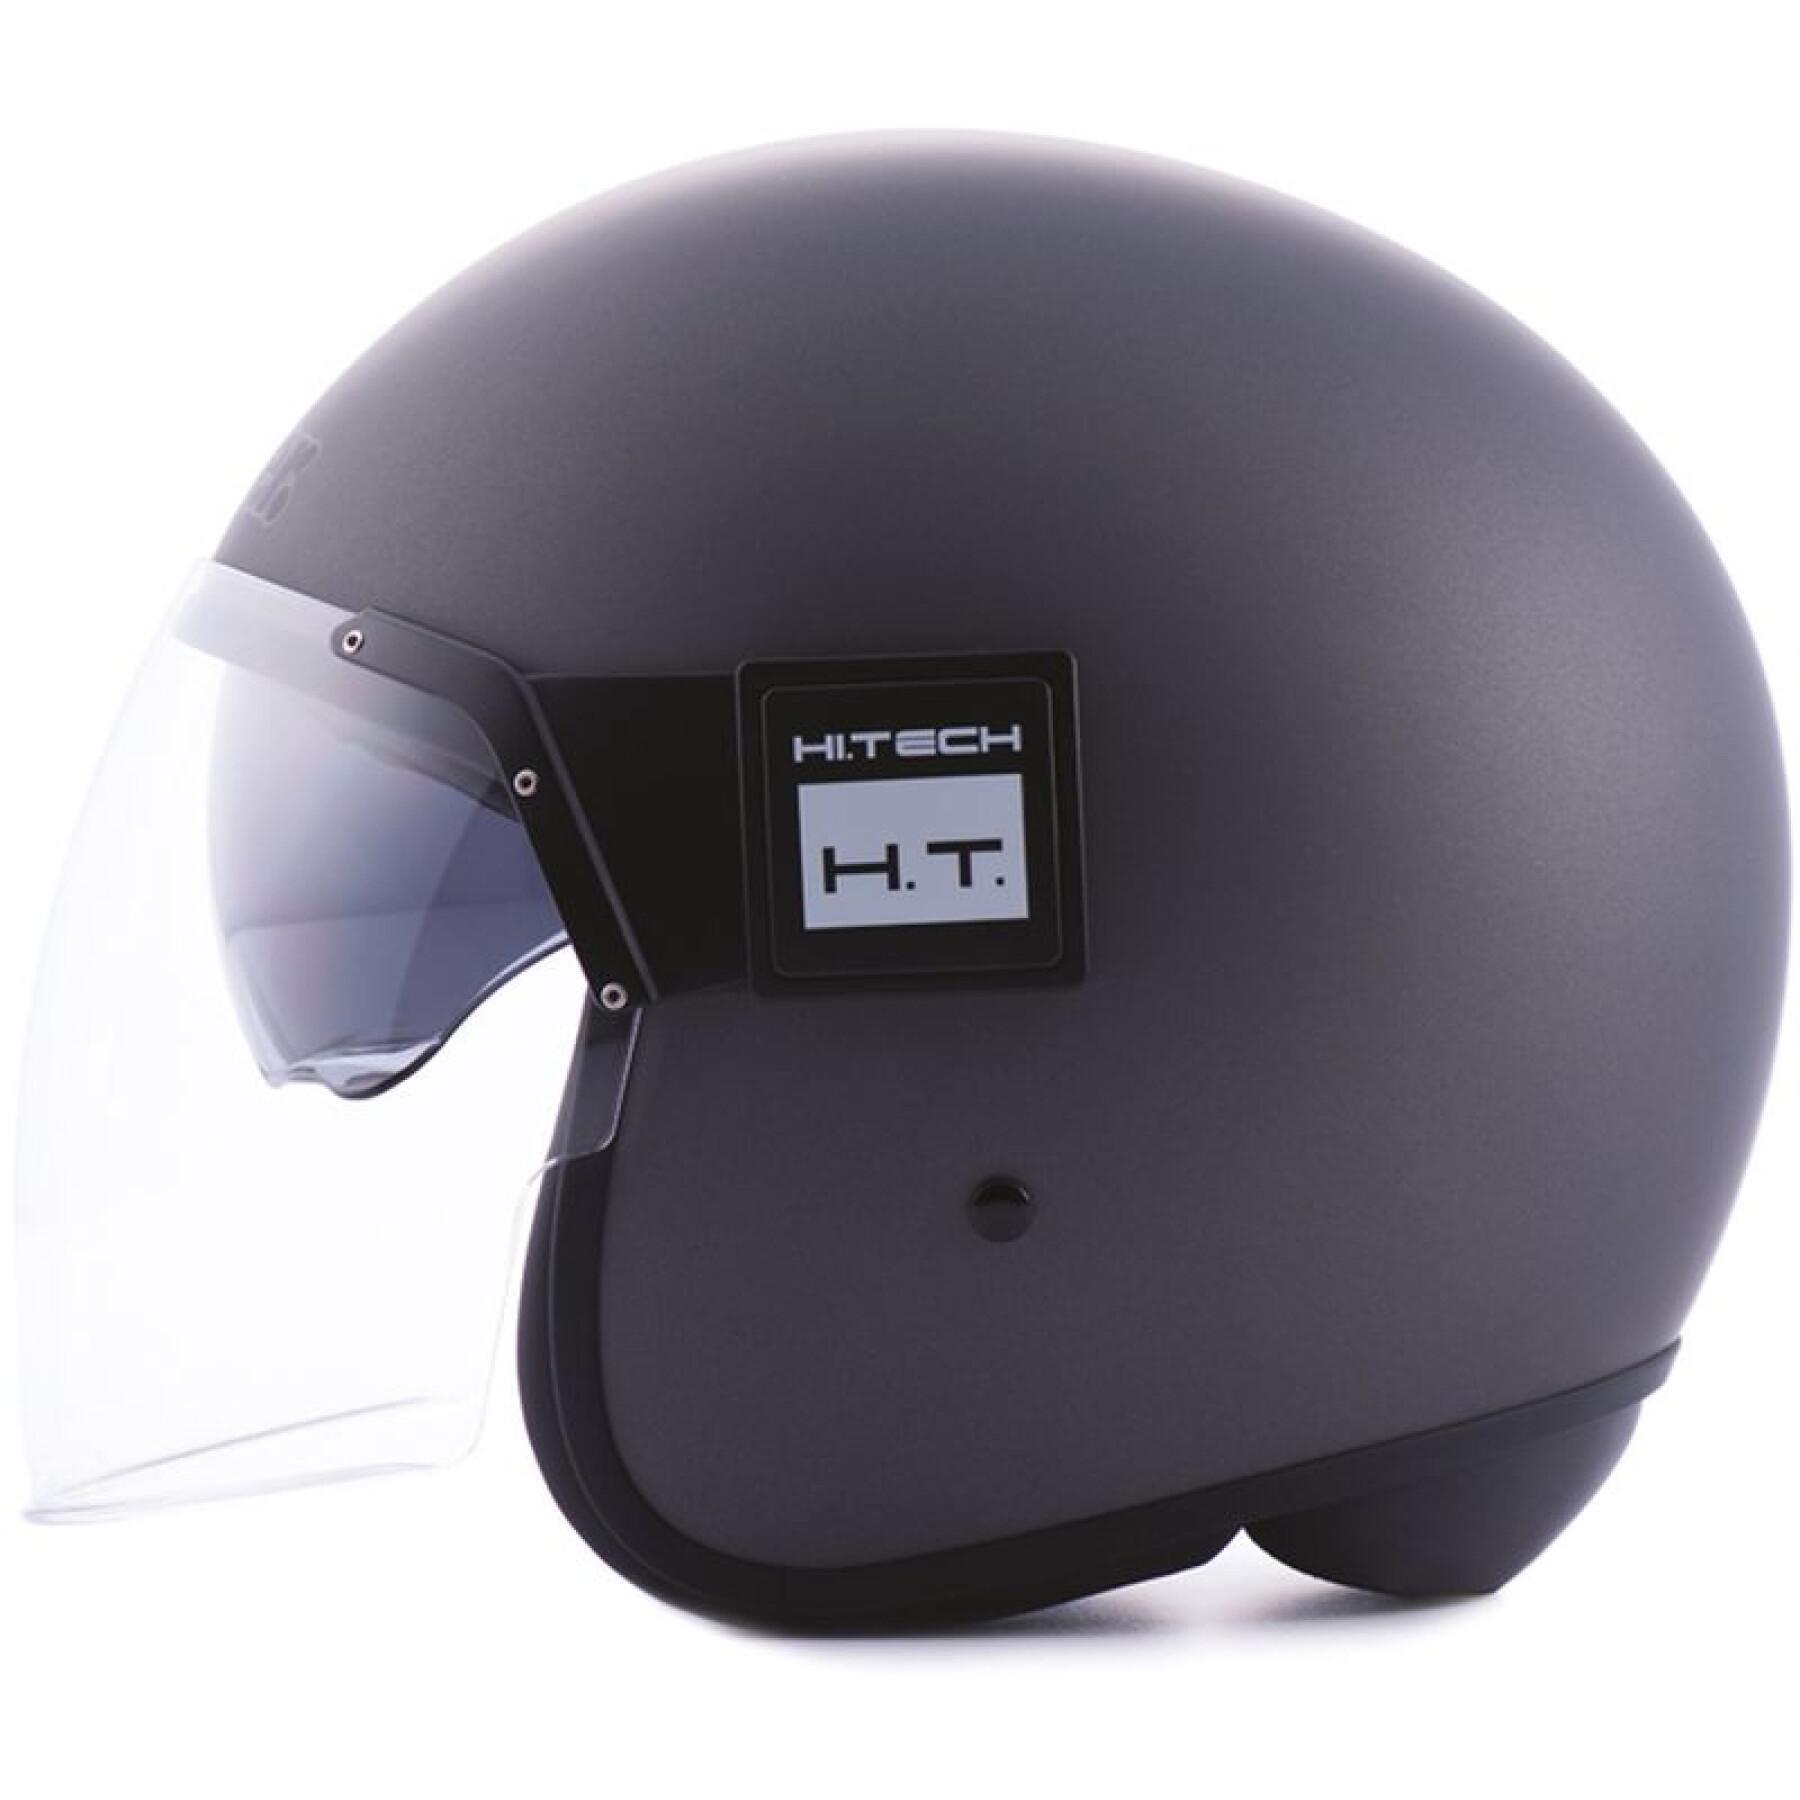 Jet motorcycle helmet Blauer POD uni